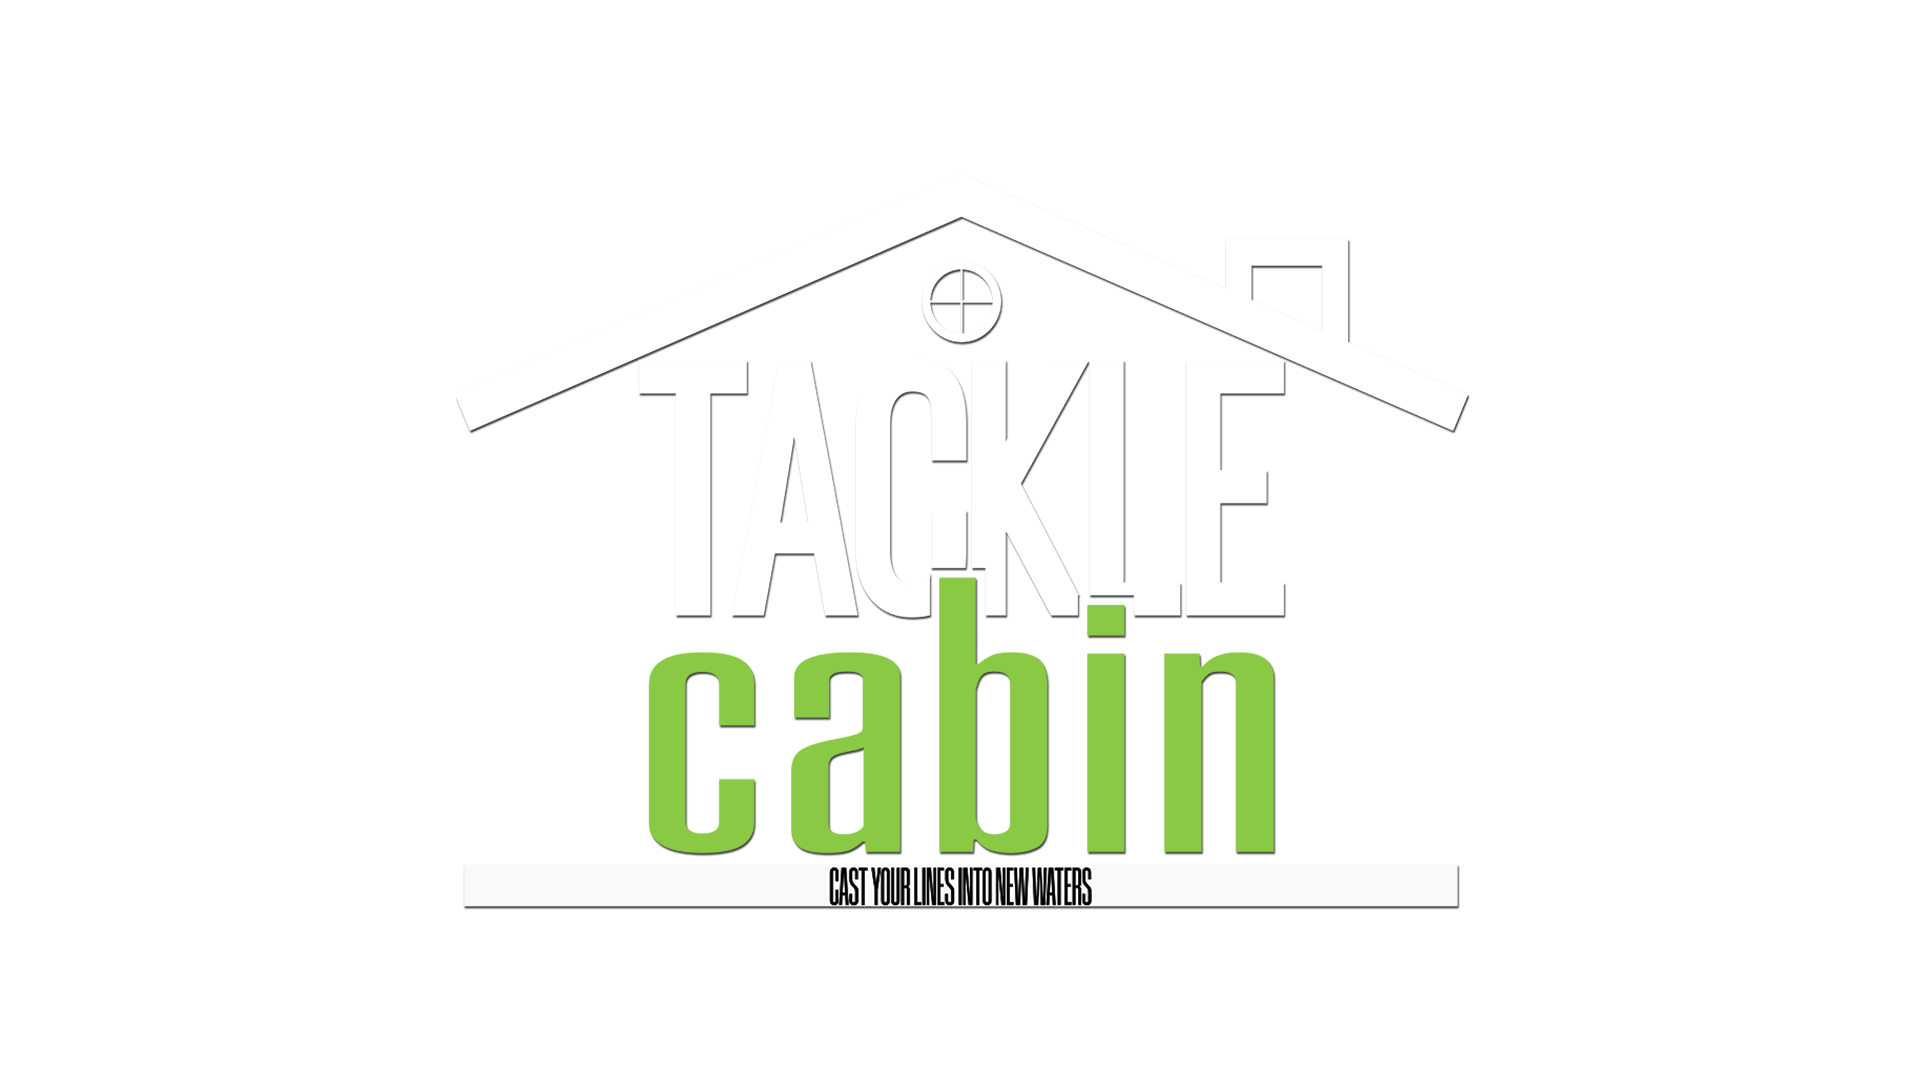 Tackle Cabin SA